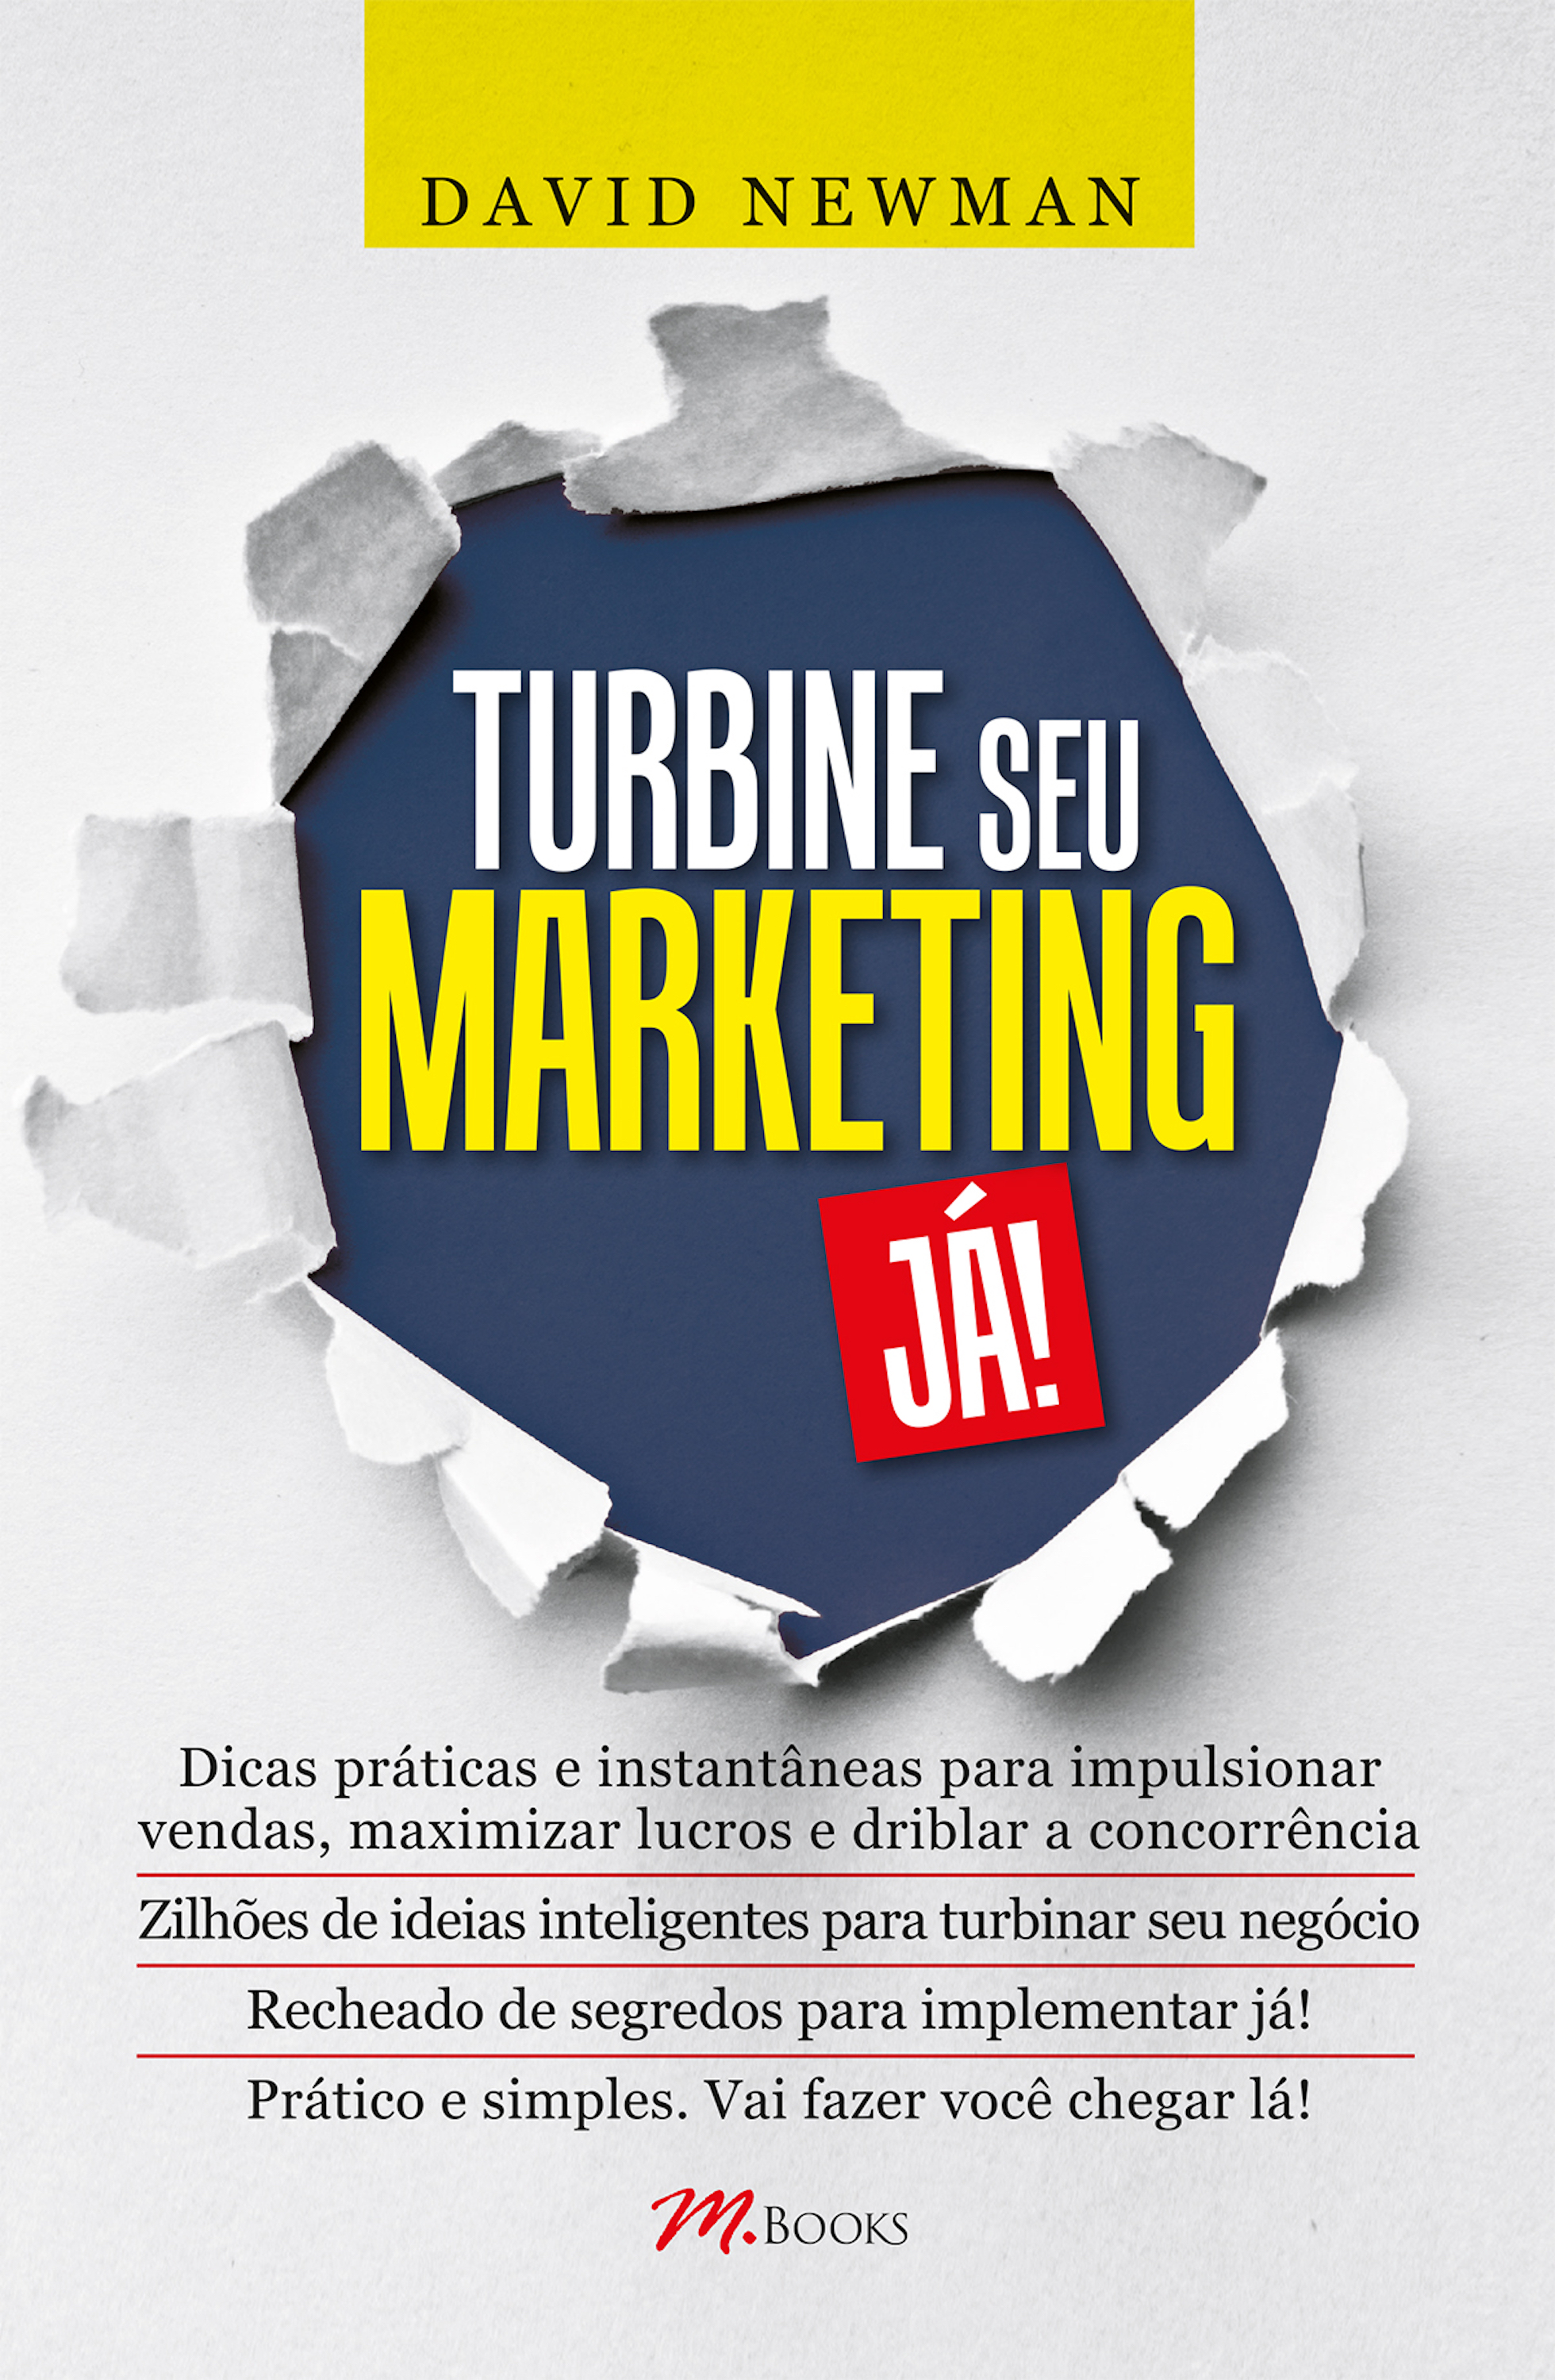 Turbine seu marketing já!